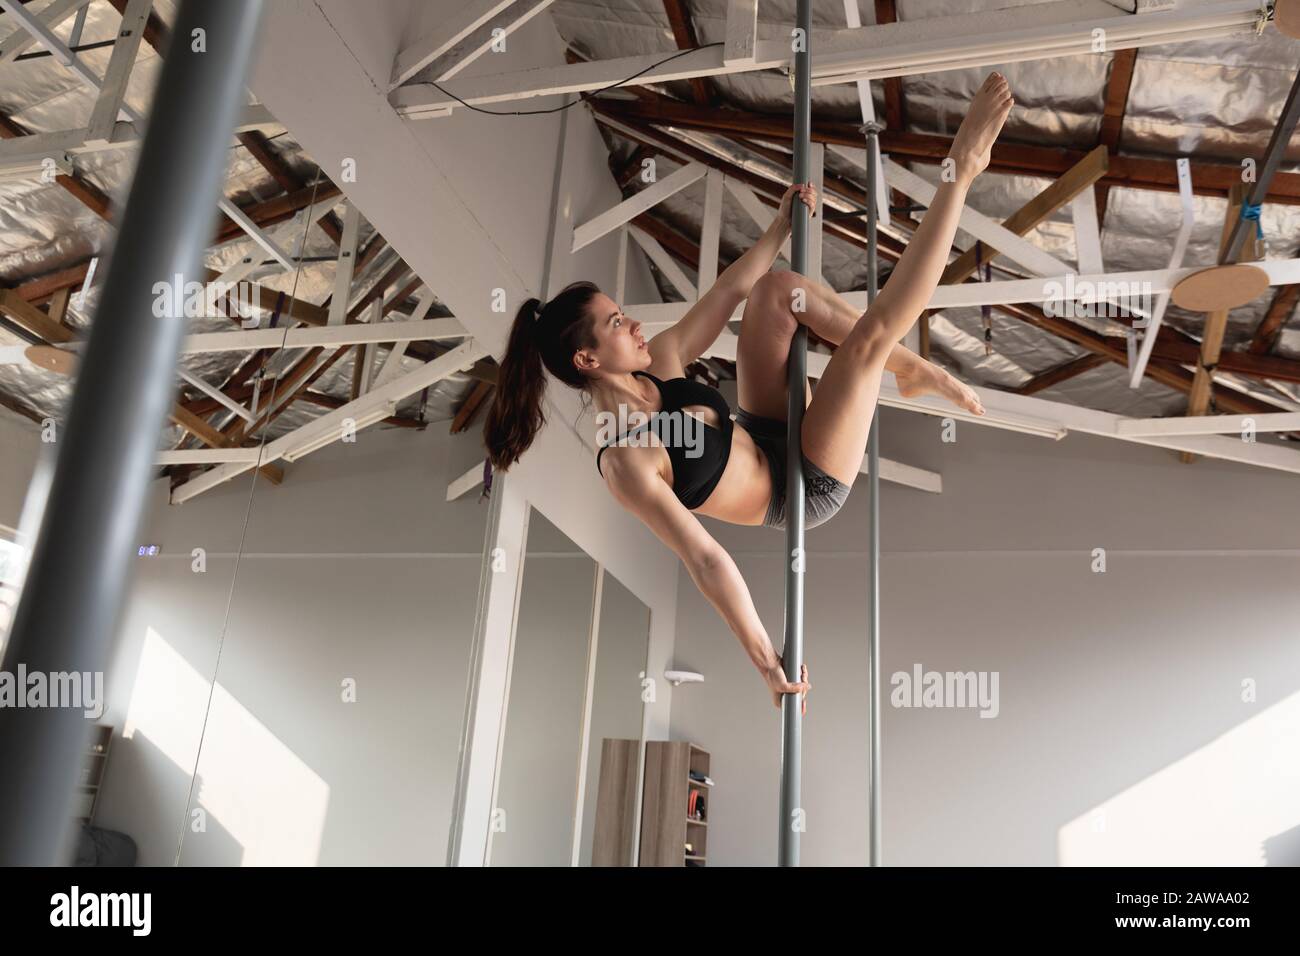 Caucasian woman pole dancing Stock Photo